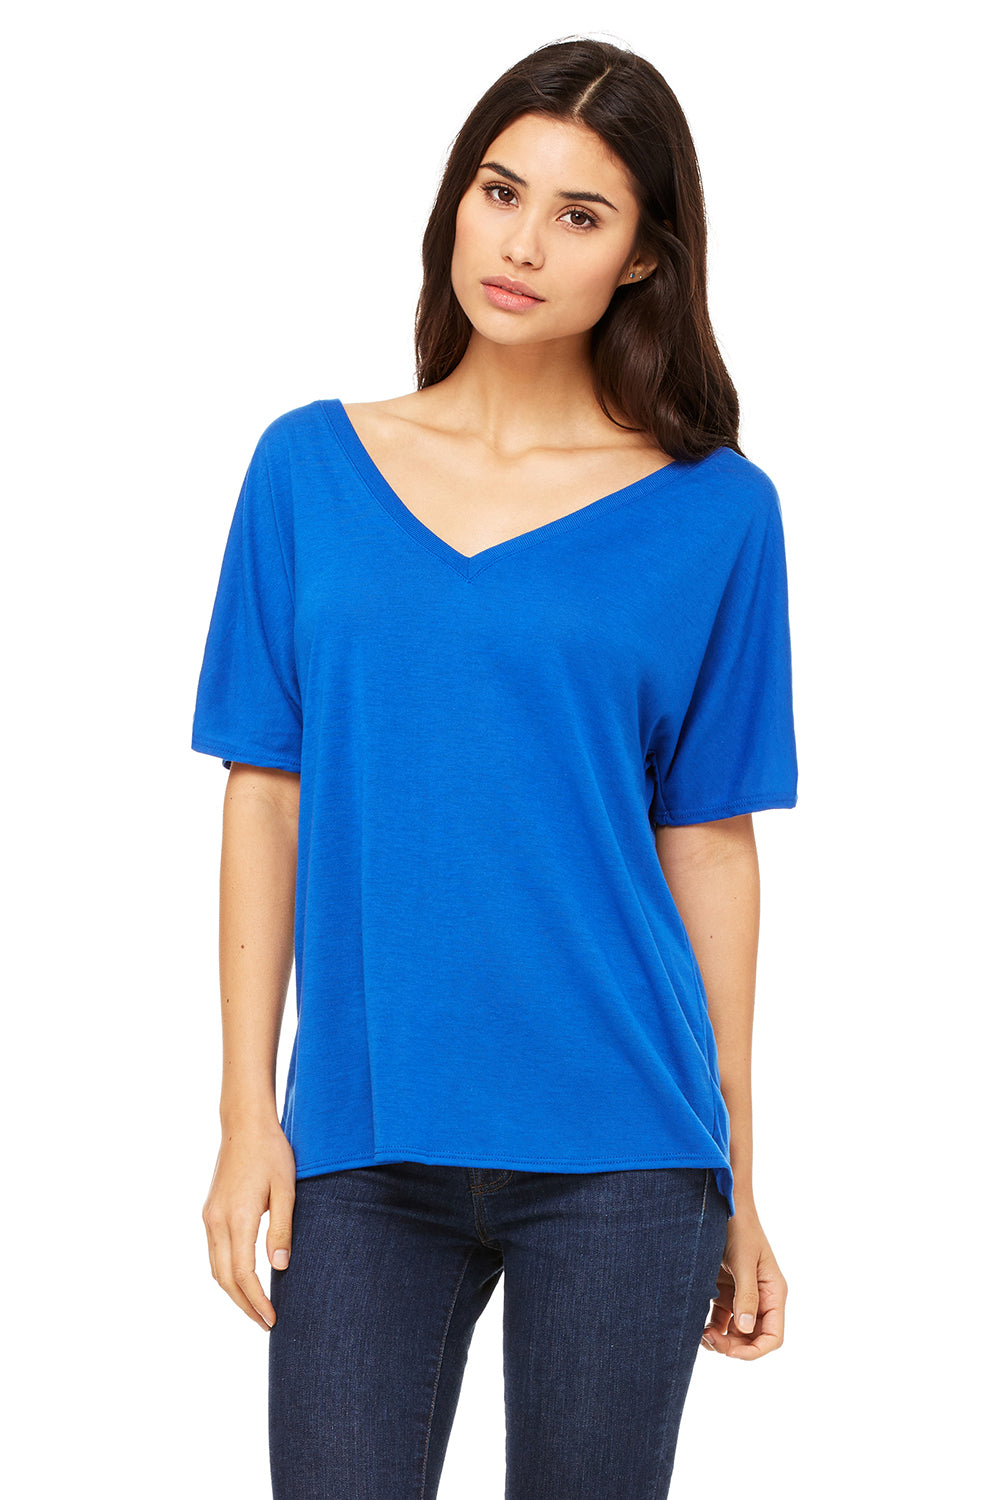 Bella + Canvas 8815 Womens Slouchy Short Sleeve V-Neck T-Shirt Royal Blue Front